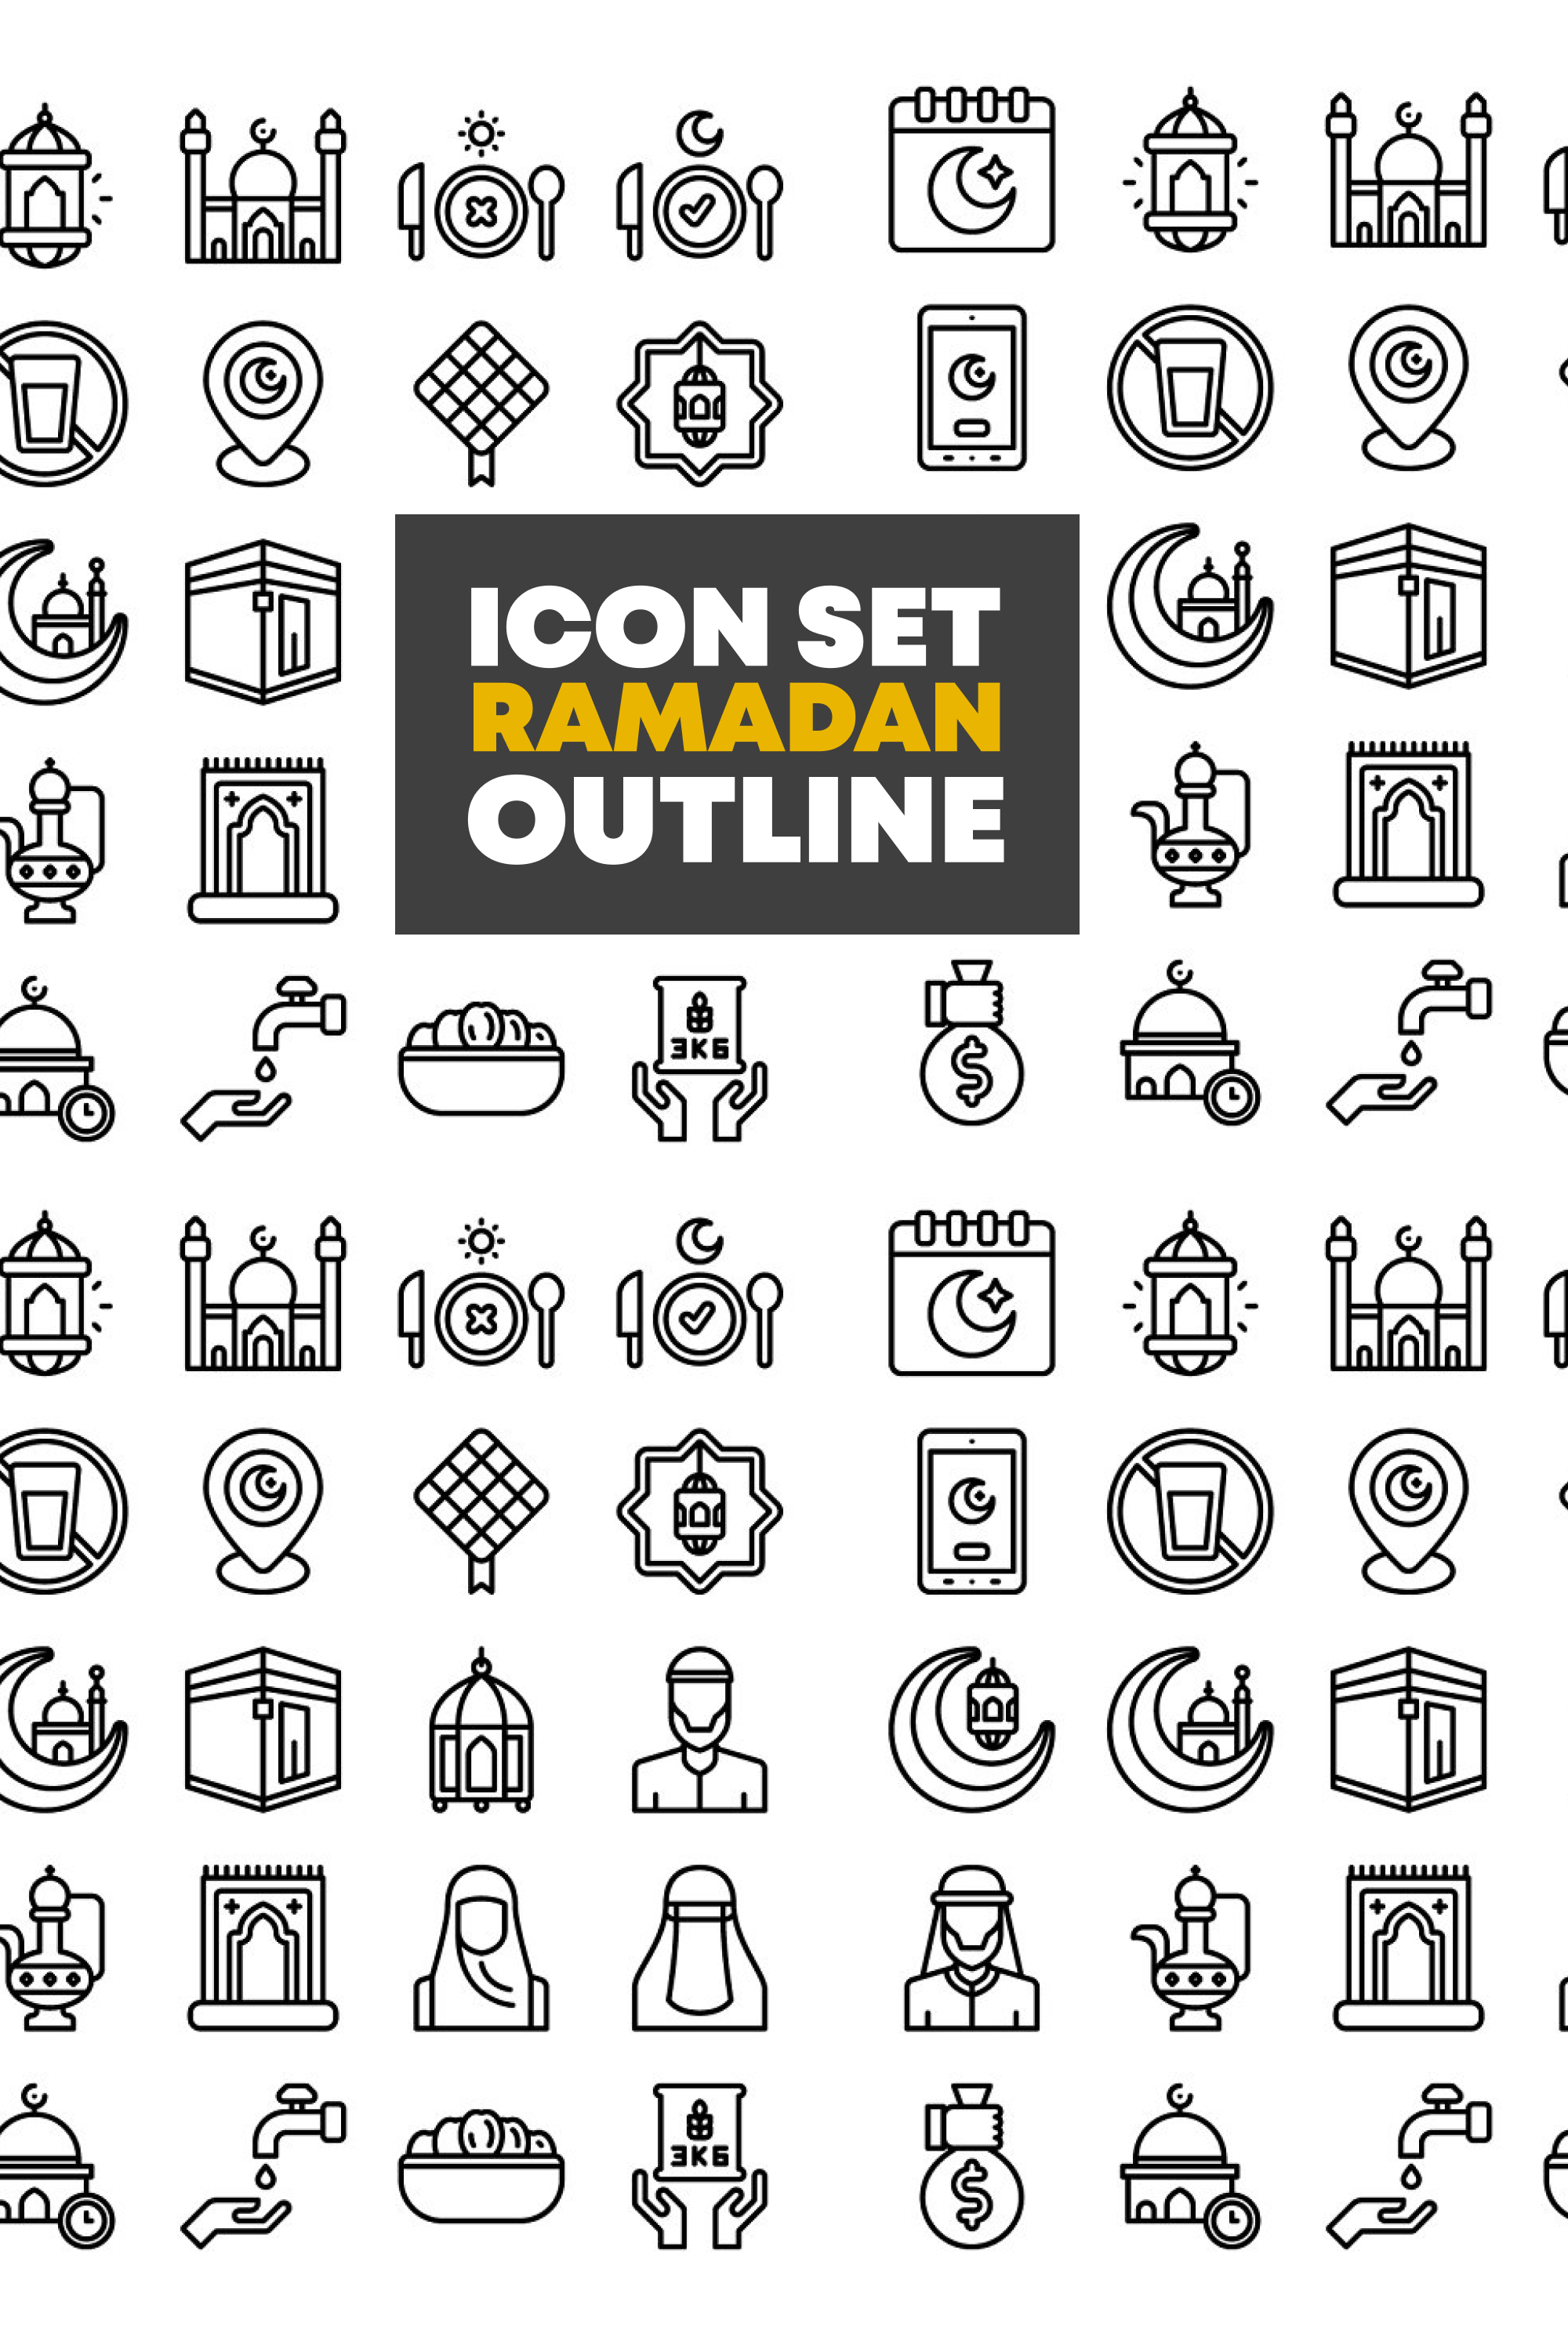 Ramadan icon set outline of pinterest.